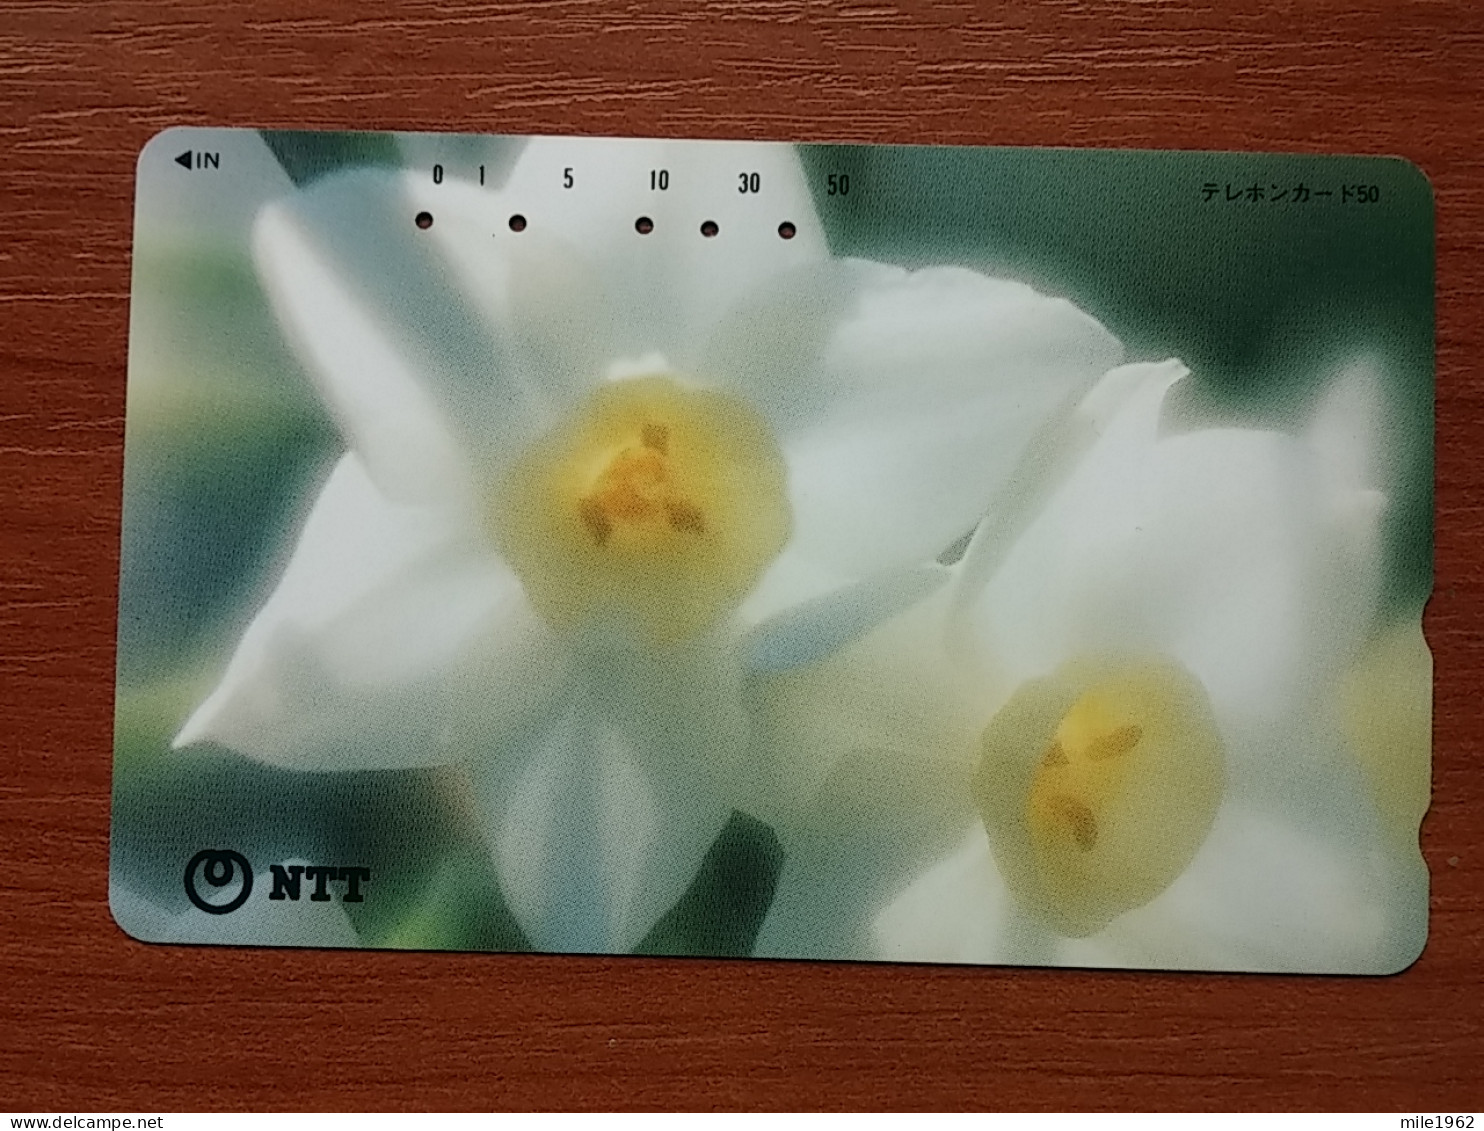 T-385 - JAPAN, Japon, Nipon, TELECARD, PHONECARD, Flower, Fleur, NTT 111-090 - Flores